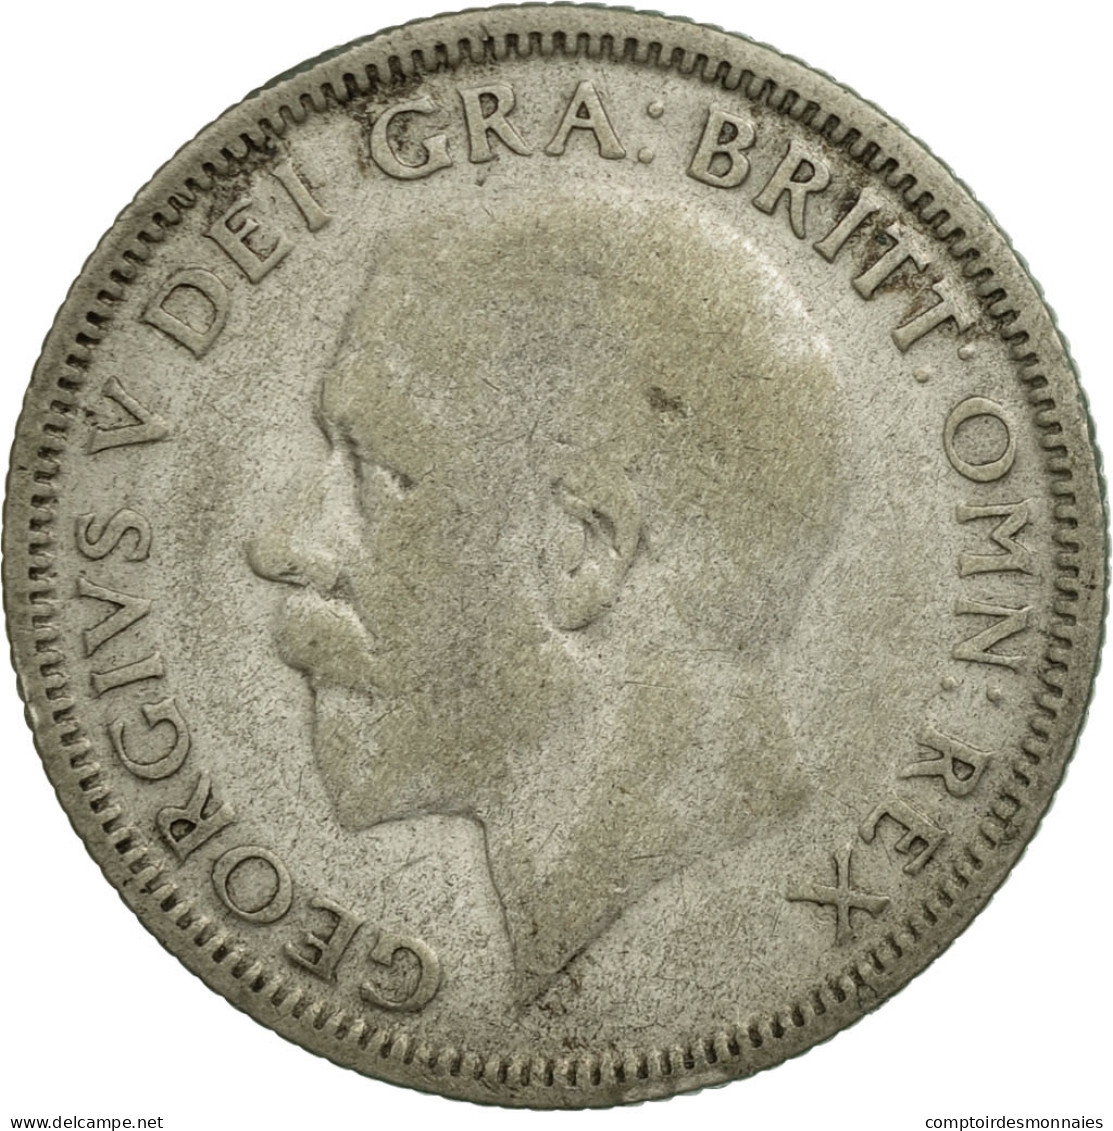 Monnaie, Grande-Bretagne, George V, Shilling, 1932, TTB, Argent, KM:833 - I. 1 Shilling